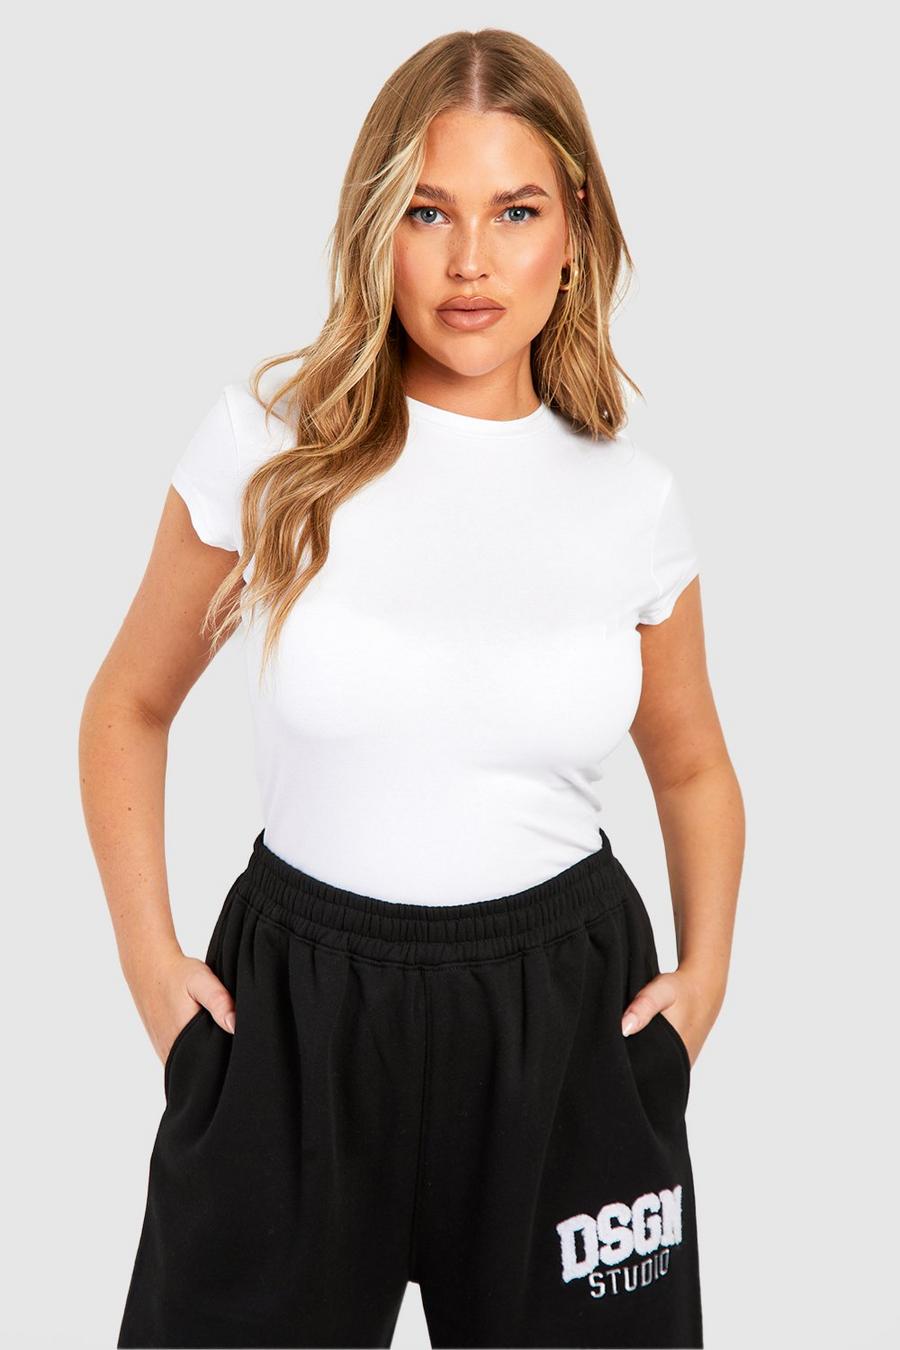 Camiseta mujer tallas grandes 20784 - Ropa mujer tallas grandes